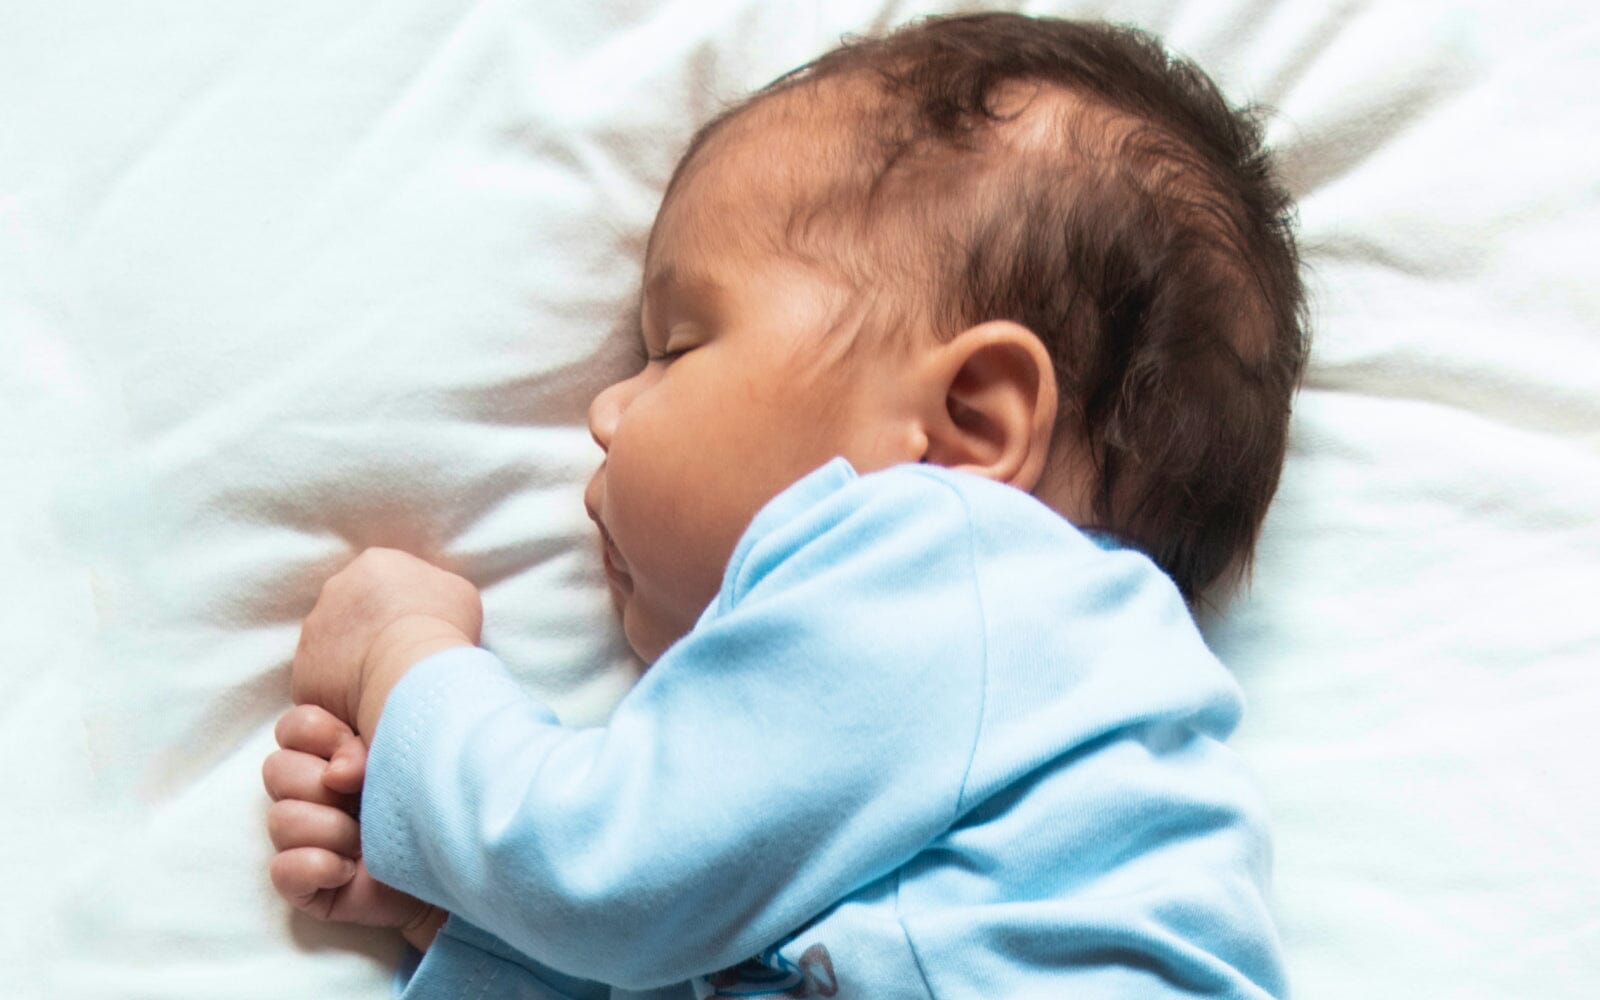 A white noise machine helps a baby sleep